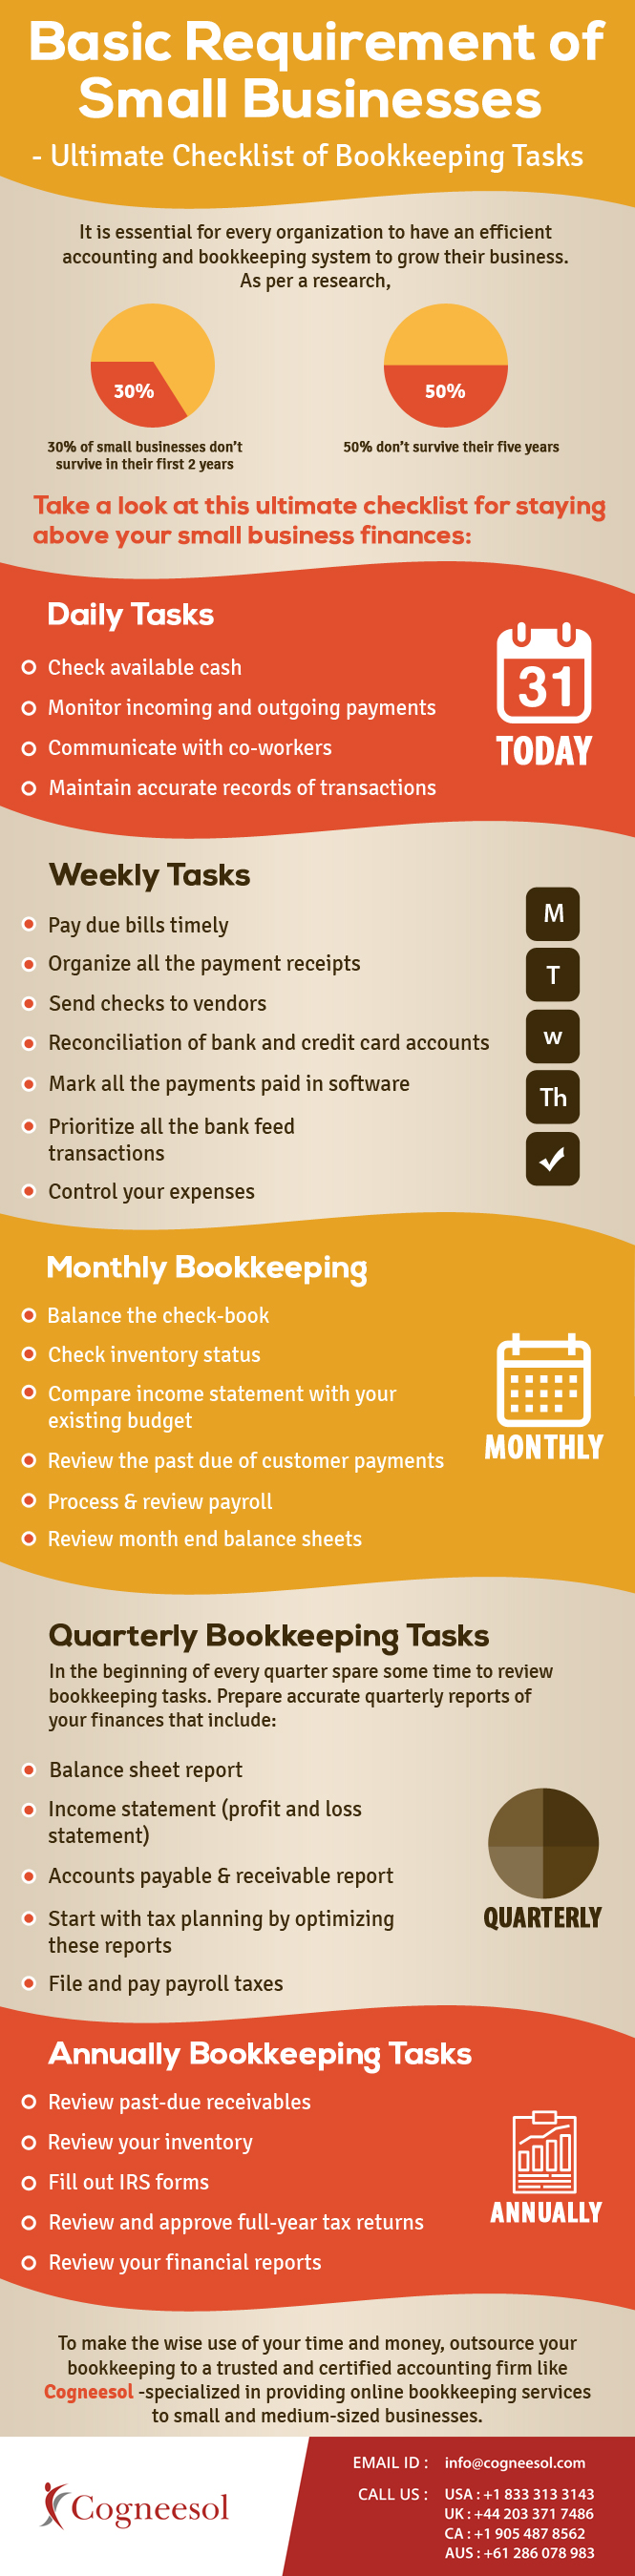 Bookkeeping Tasks